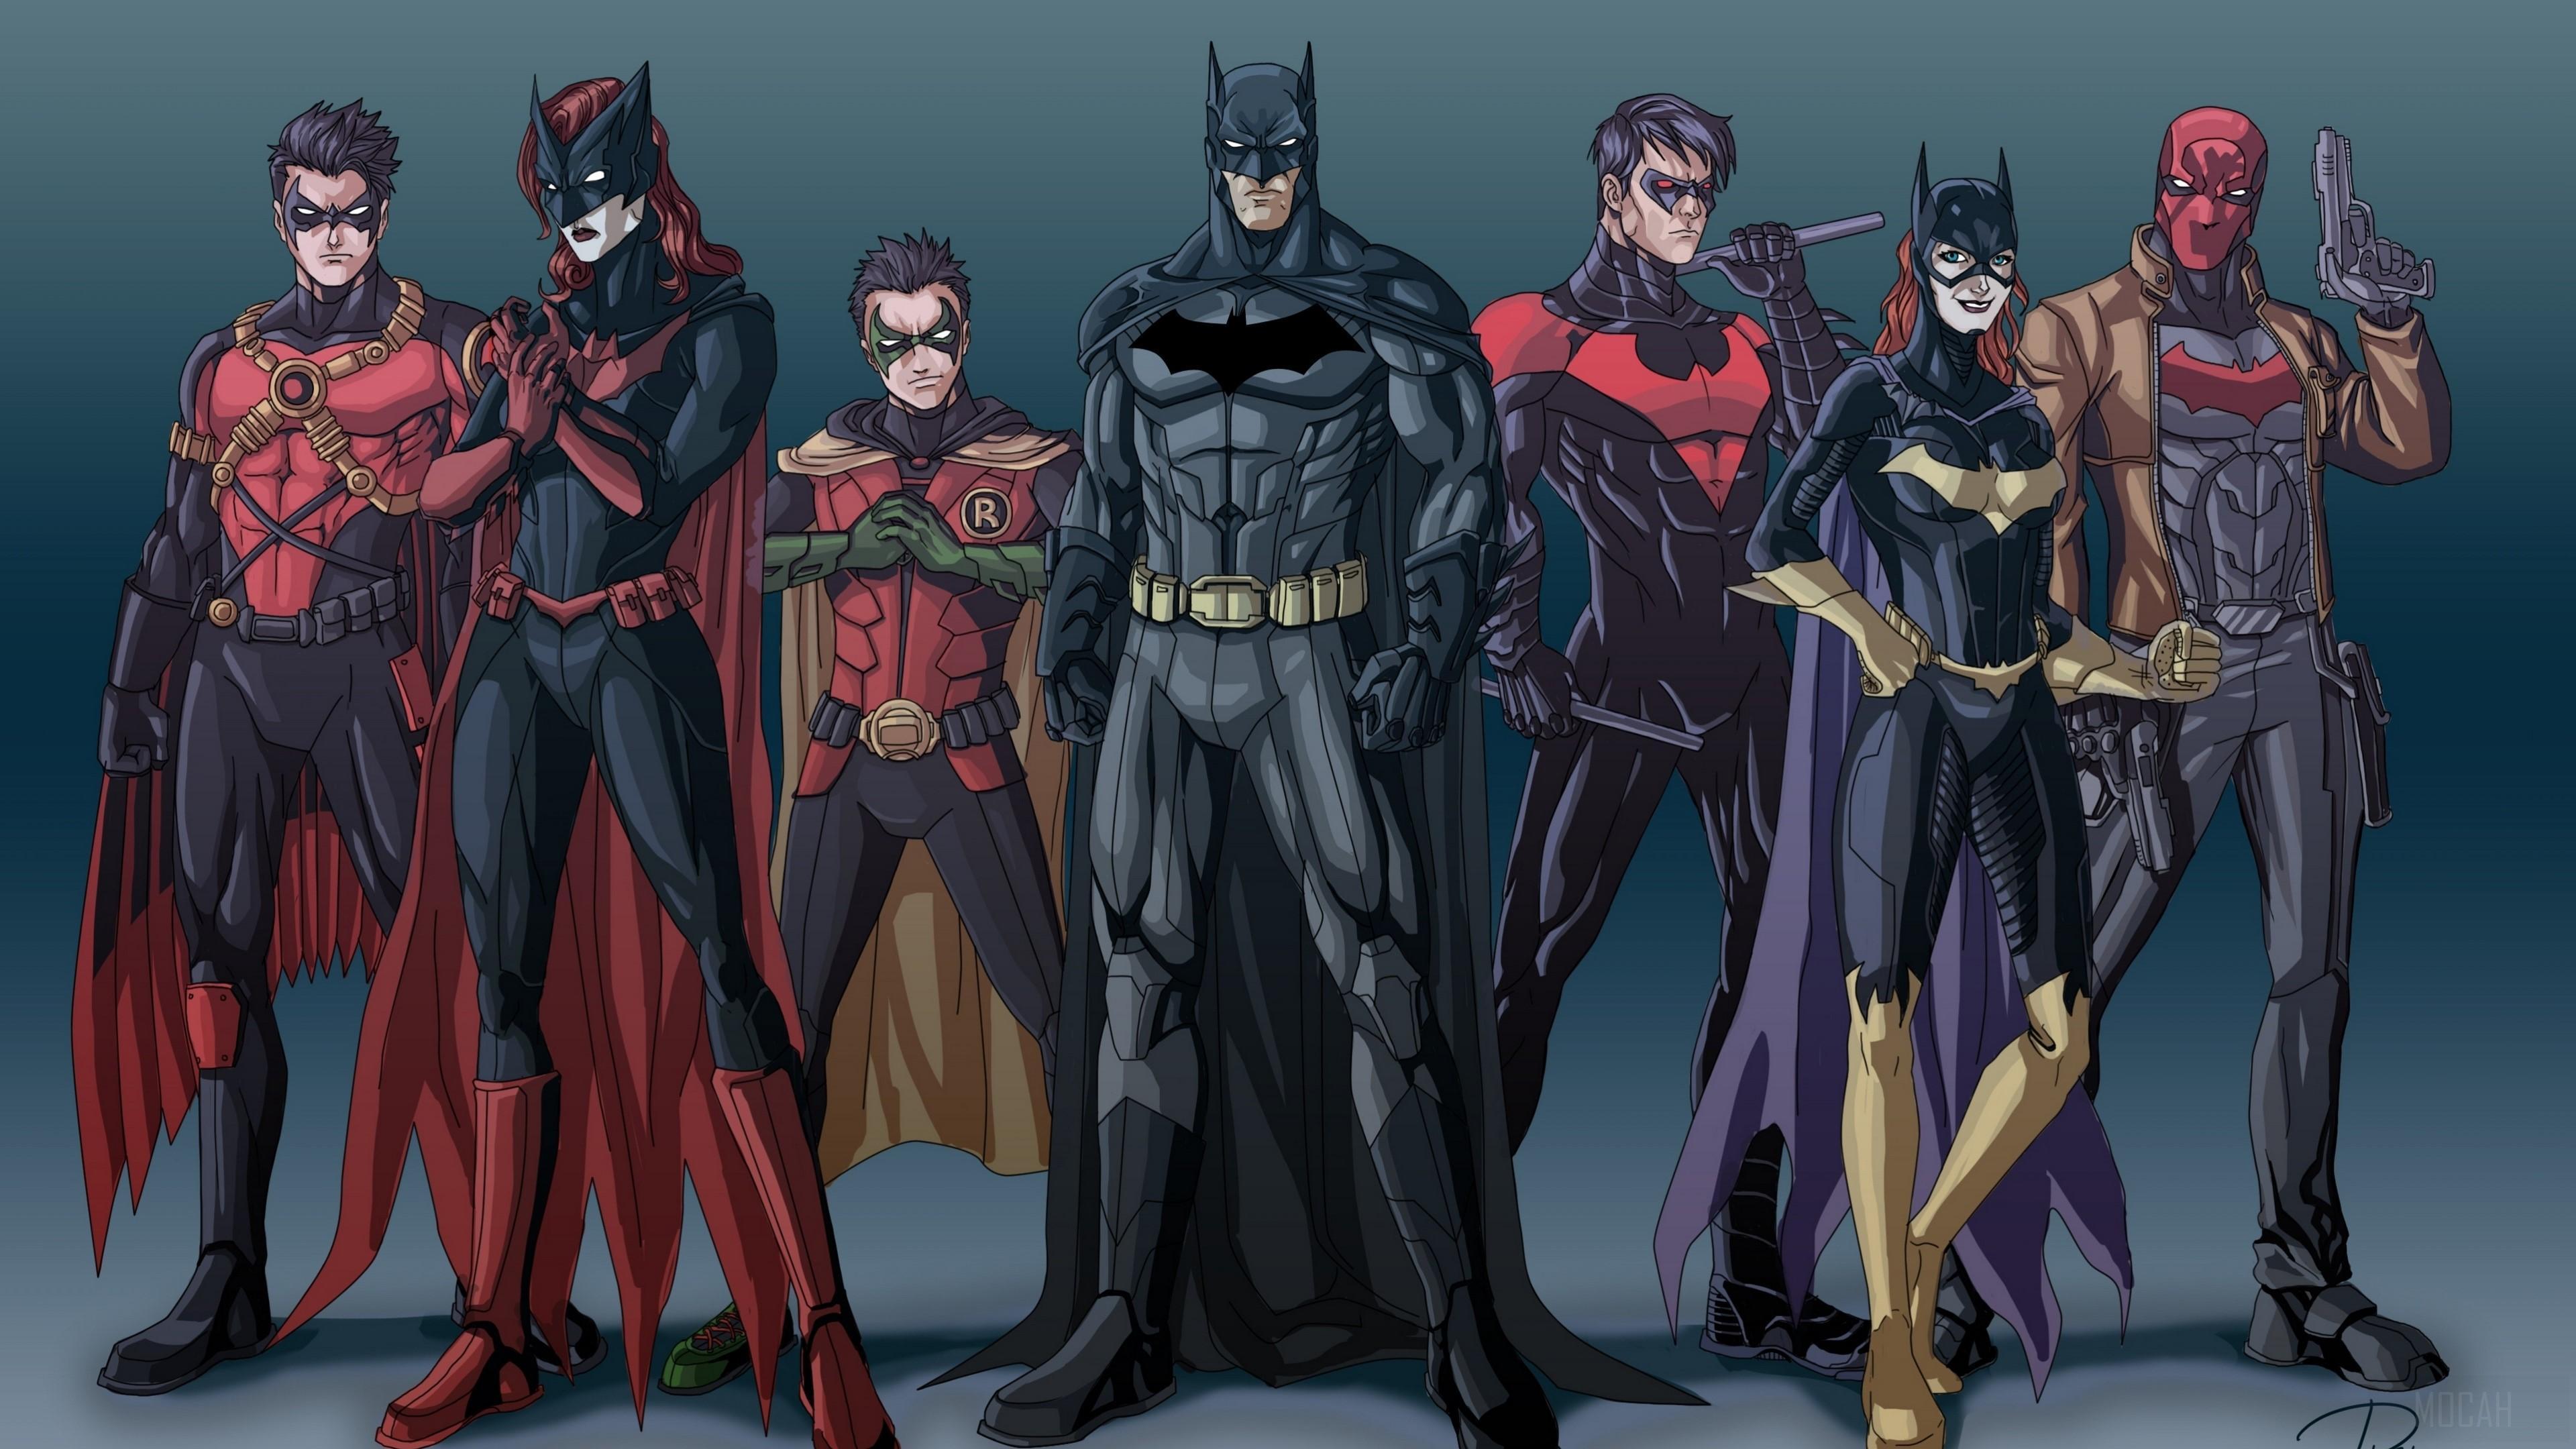 HD wallpaper, Barbara Gordon, Red Robin, Robin, Jason Todd, Dc Comics, Batman, Nightwing, Bruce Wayne, The New 52, Tim Drake 4K, Batgirl, Kate Kane, Damian Wayne, Batwoman, Dick Grayson, Red Hood